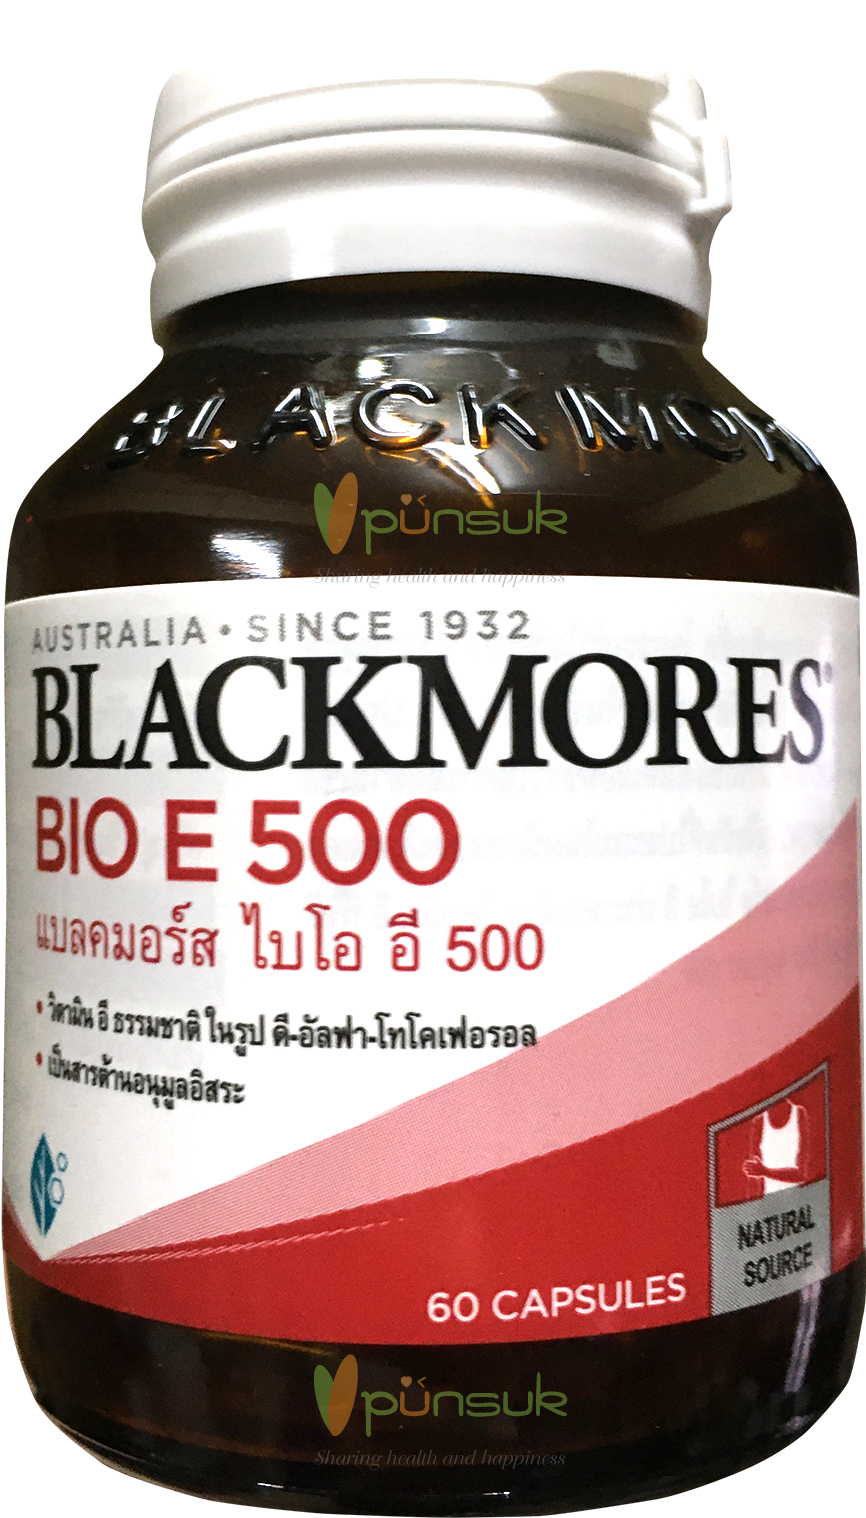 Blackmores Bio E 500IU (60 Capsules) แบลคมอร์ส ไบโอ อี 500 ไอยู (60 แคปซูล)